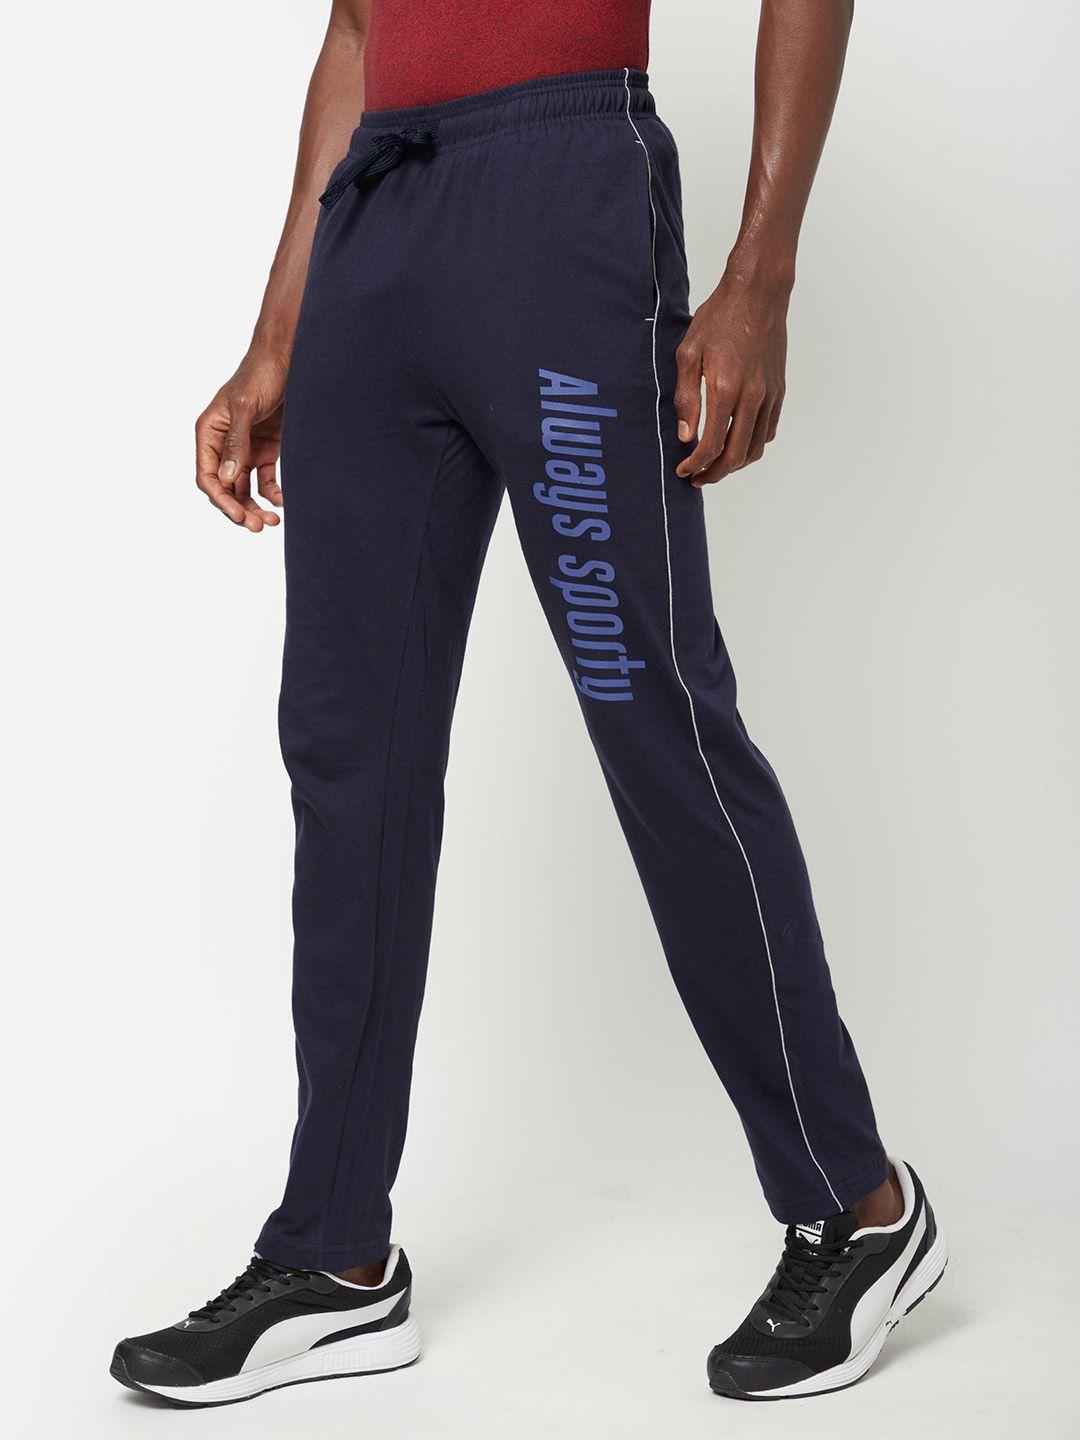 sporto-men-navy-blue-typography-printed-cotton-slim-fit-track-pant